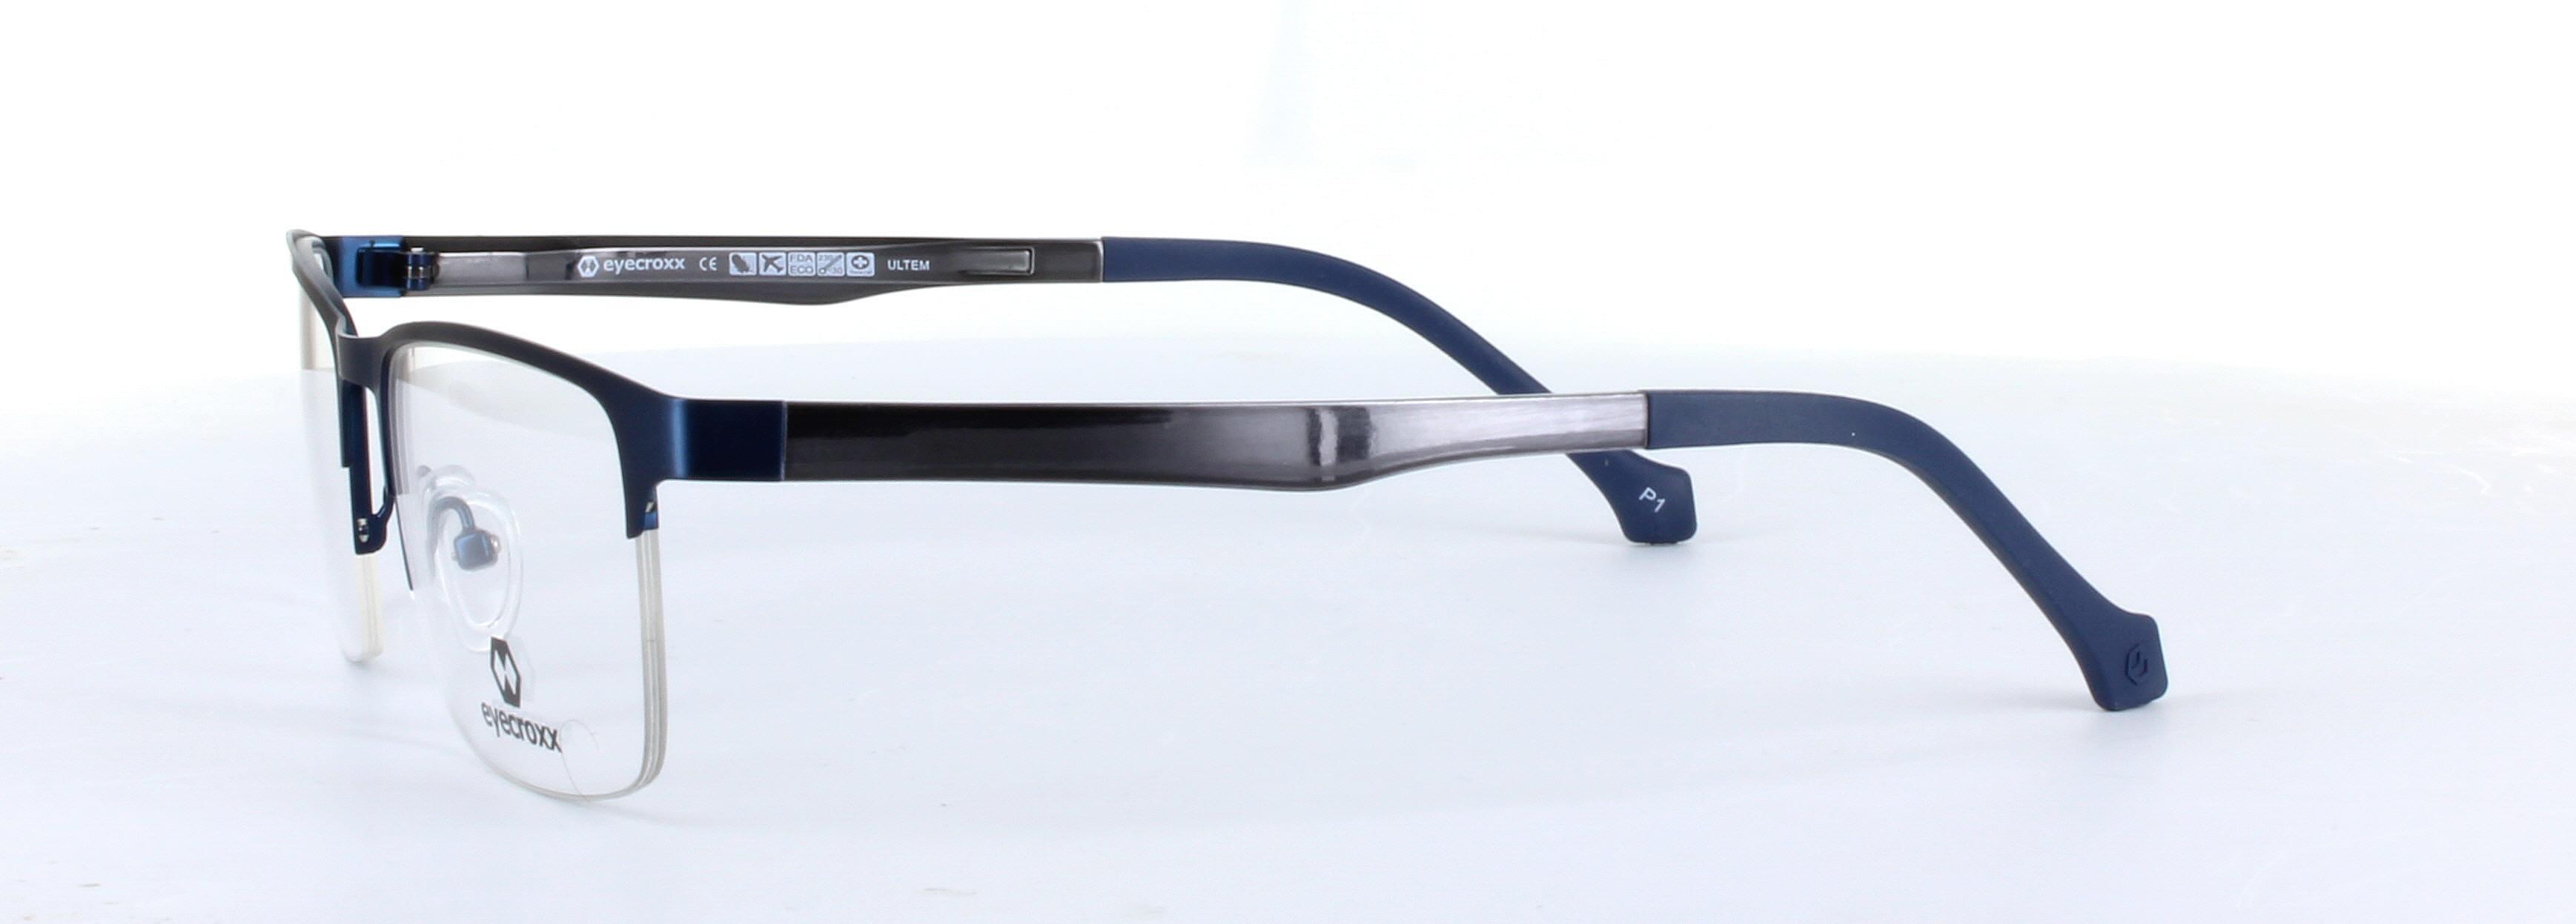 Eyecroxx 555 Blue Semi Rimless Metal Glasses - Image View 2